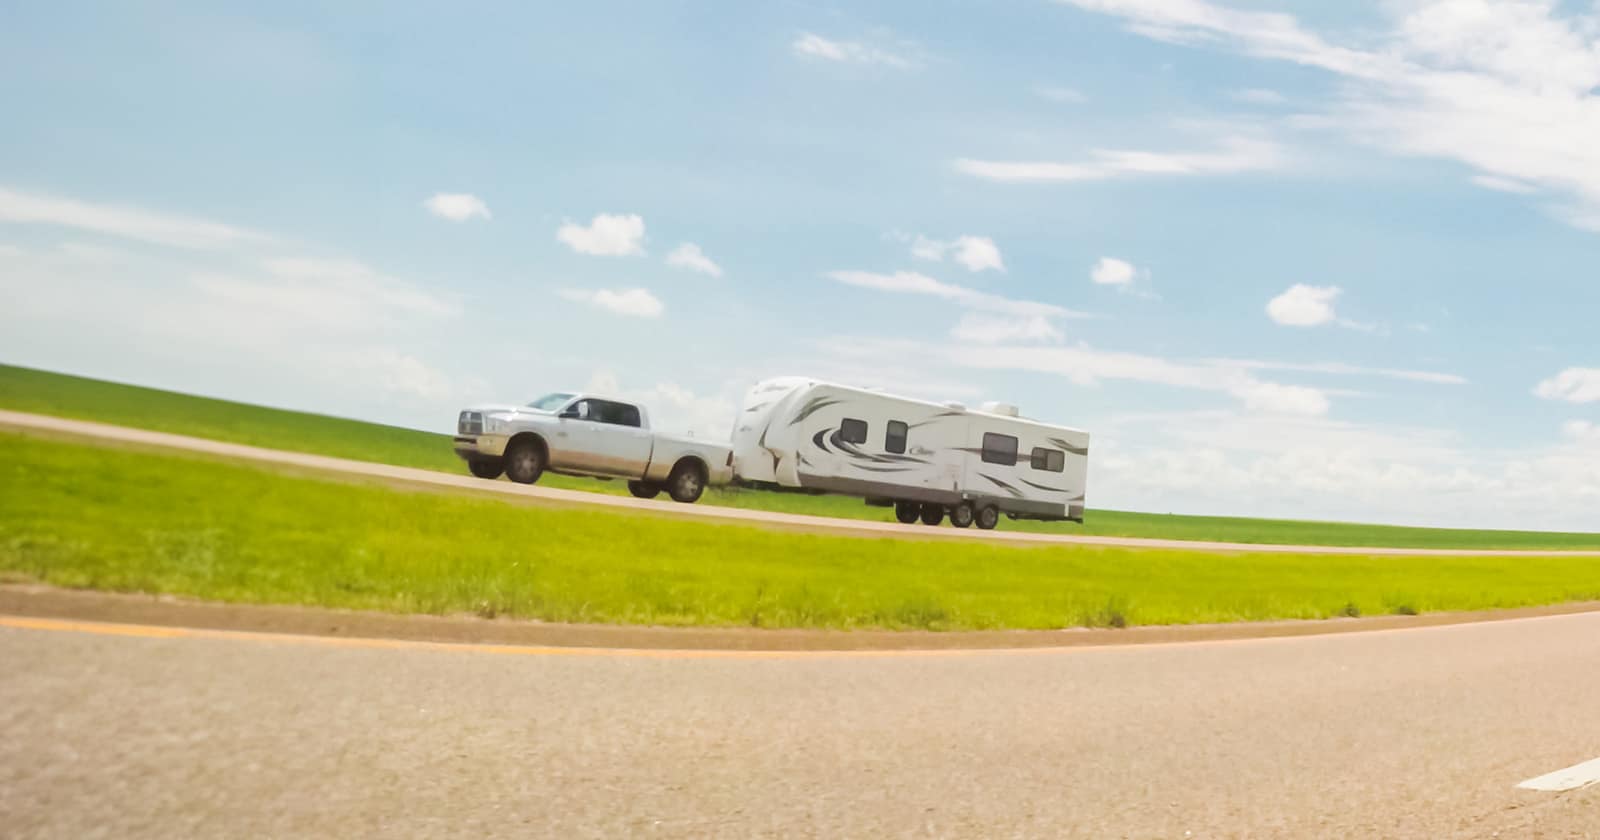 RV on a Kansas road